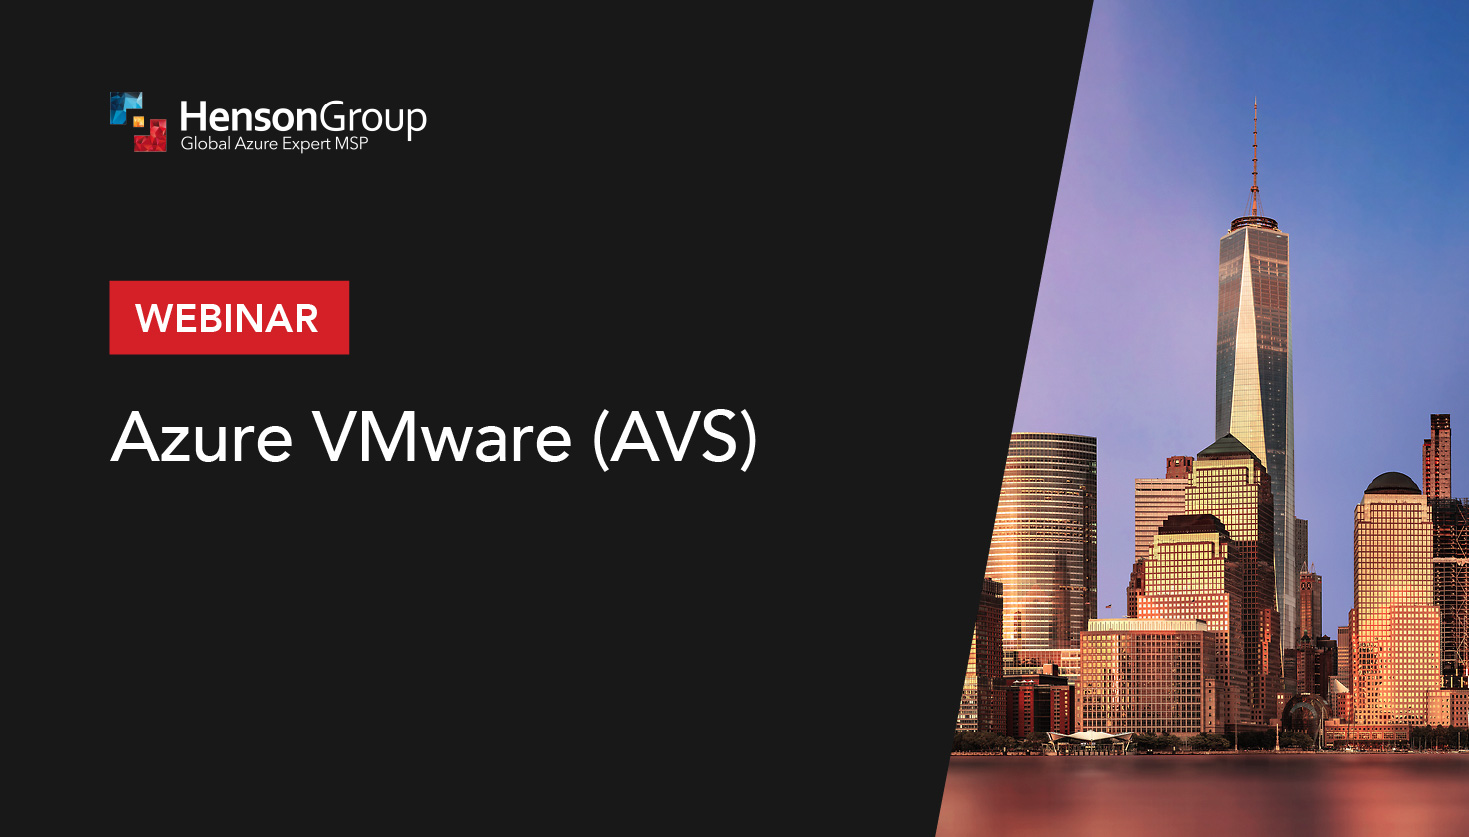 Henson-Group-Webinar-Azure-VMware-AVS-IMAGES-Featured